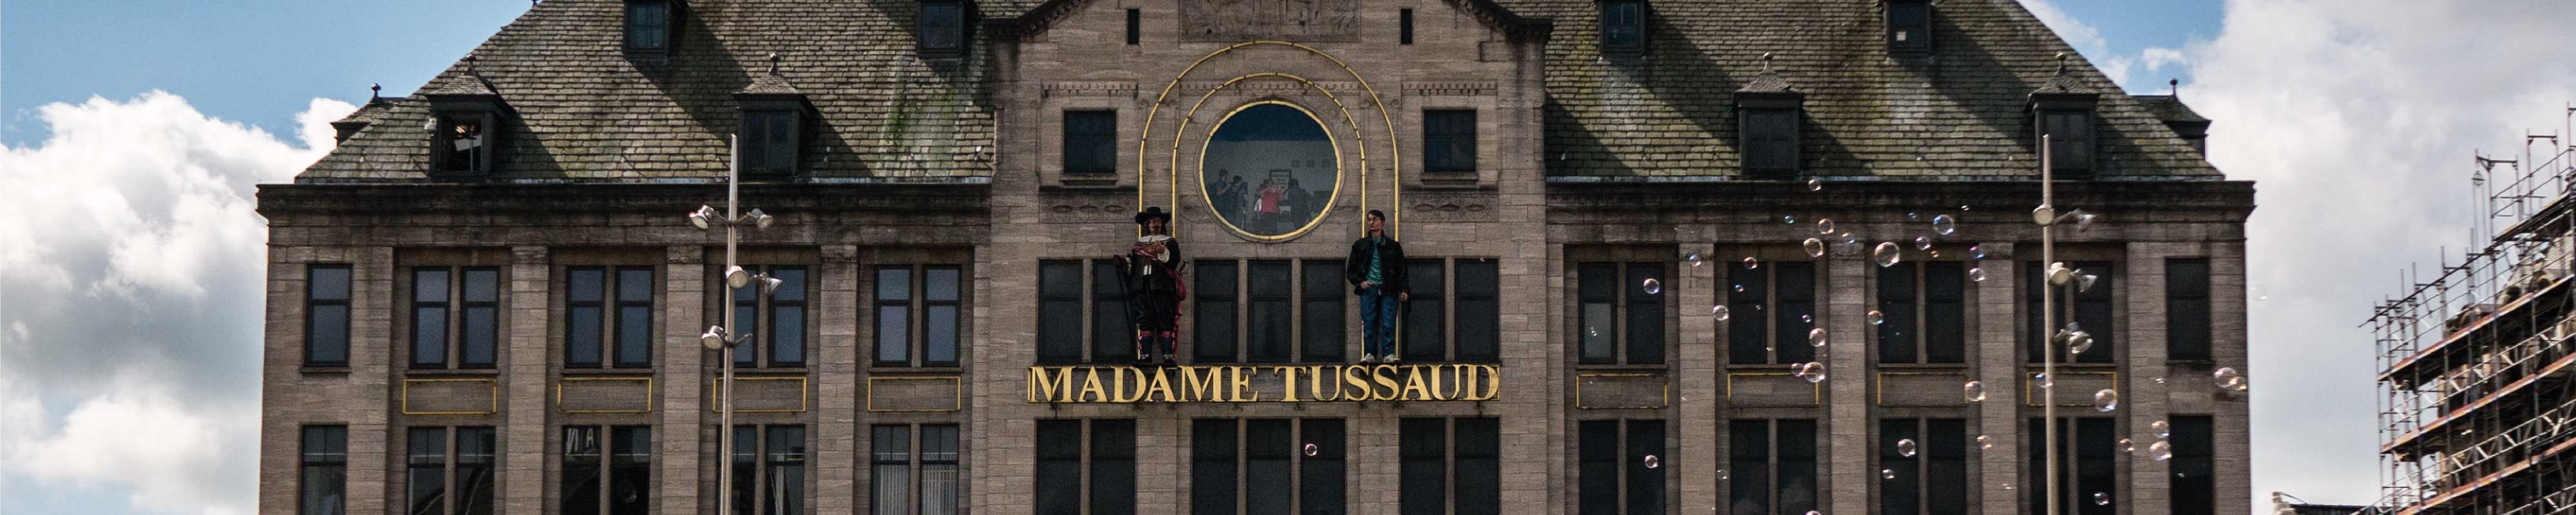 near the Madame Tussauds Museum